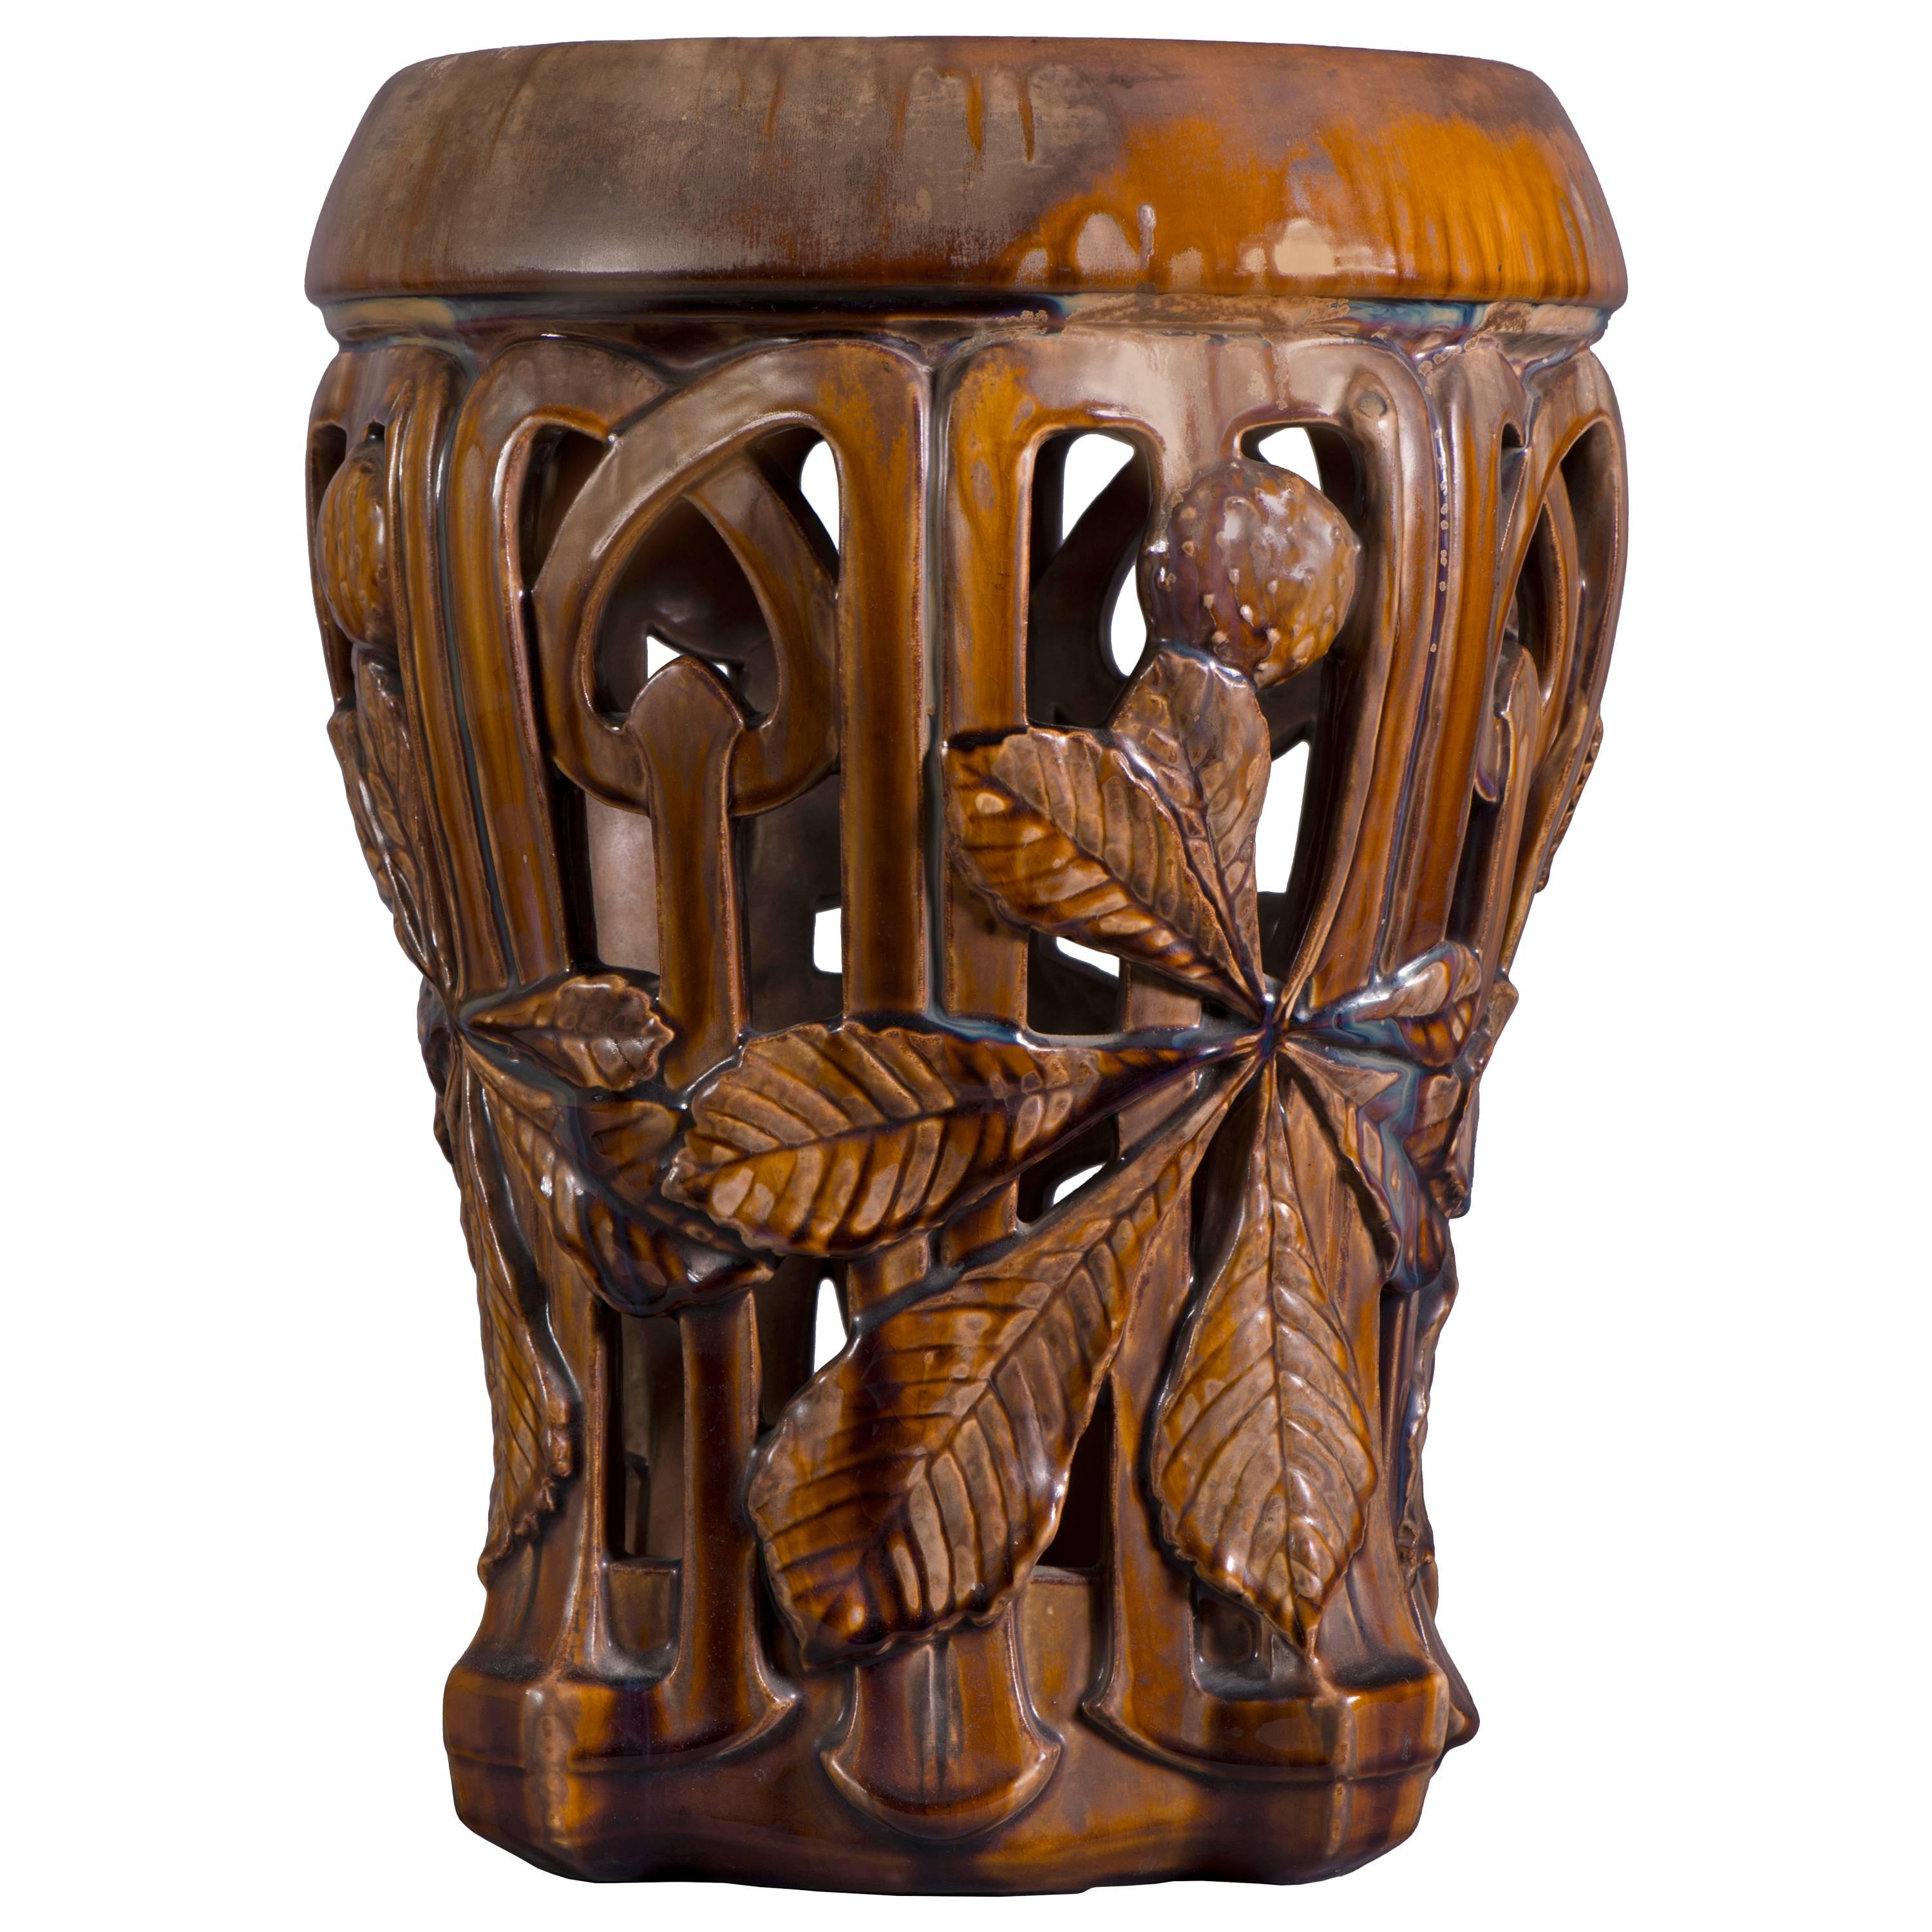 Rare Art Nouveau Ceramic Stool with Chestnut Leaves Decor For Sale